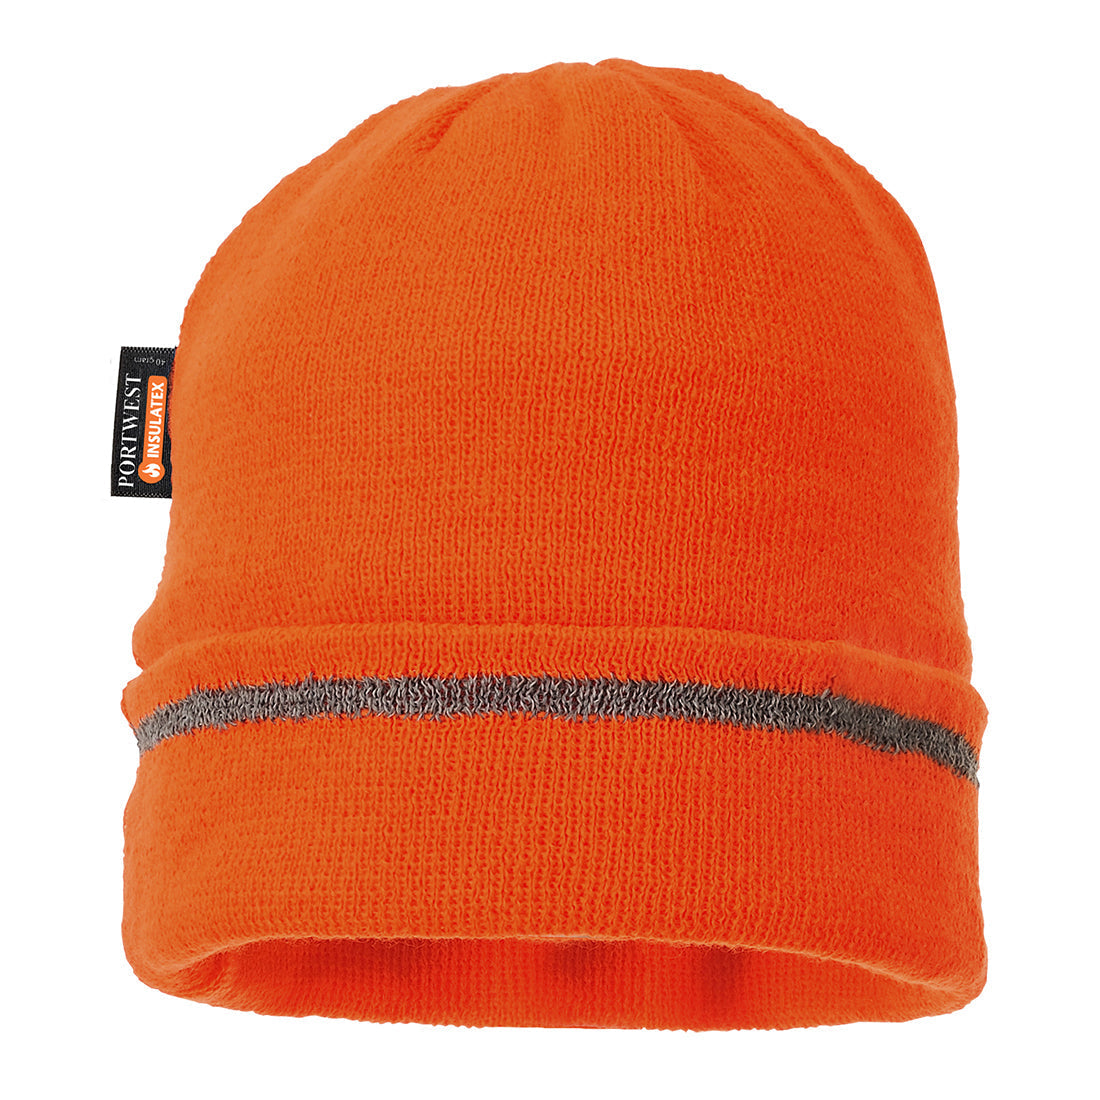 Portwest B023 Reflective Trim Knit Hat Insulatex Lined 1#colour_orange